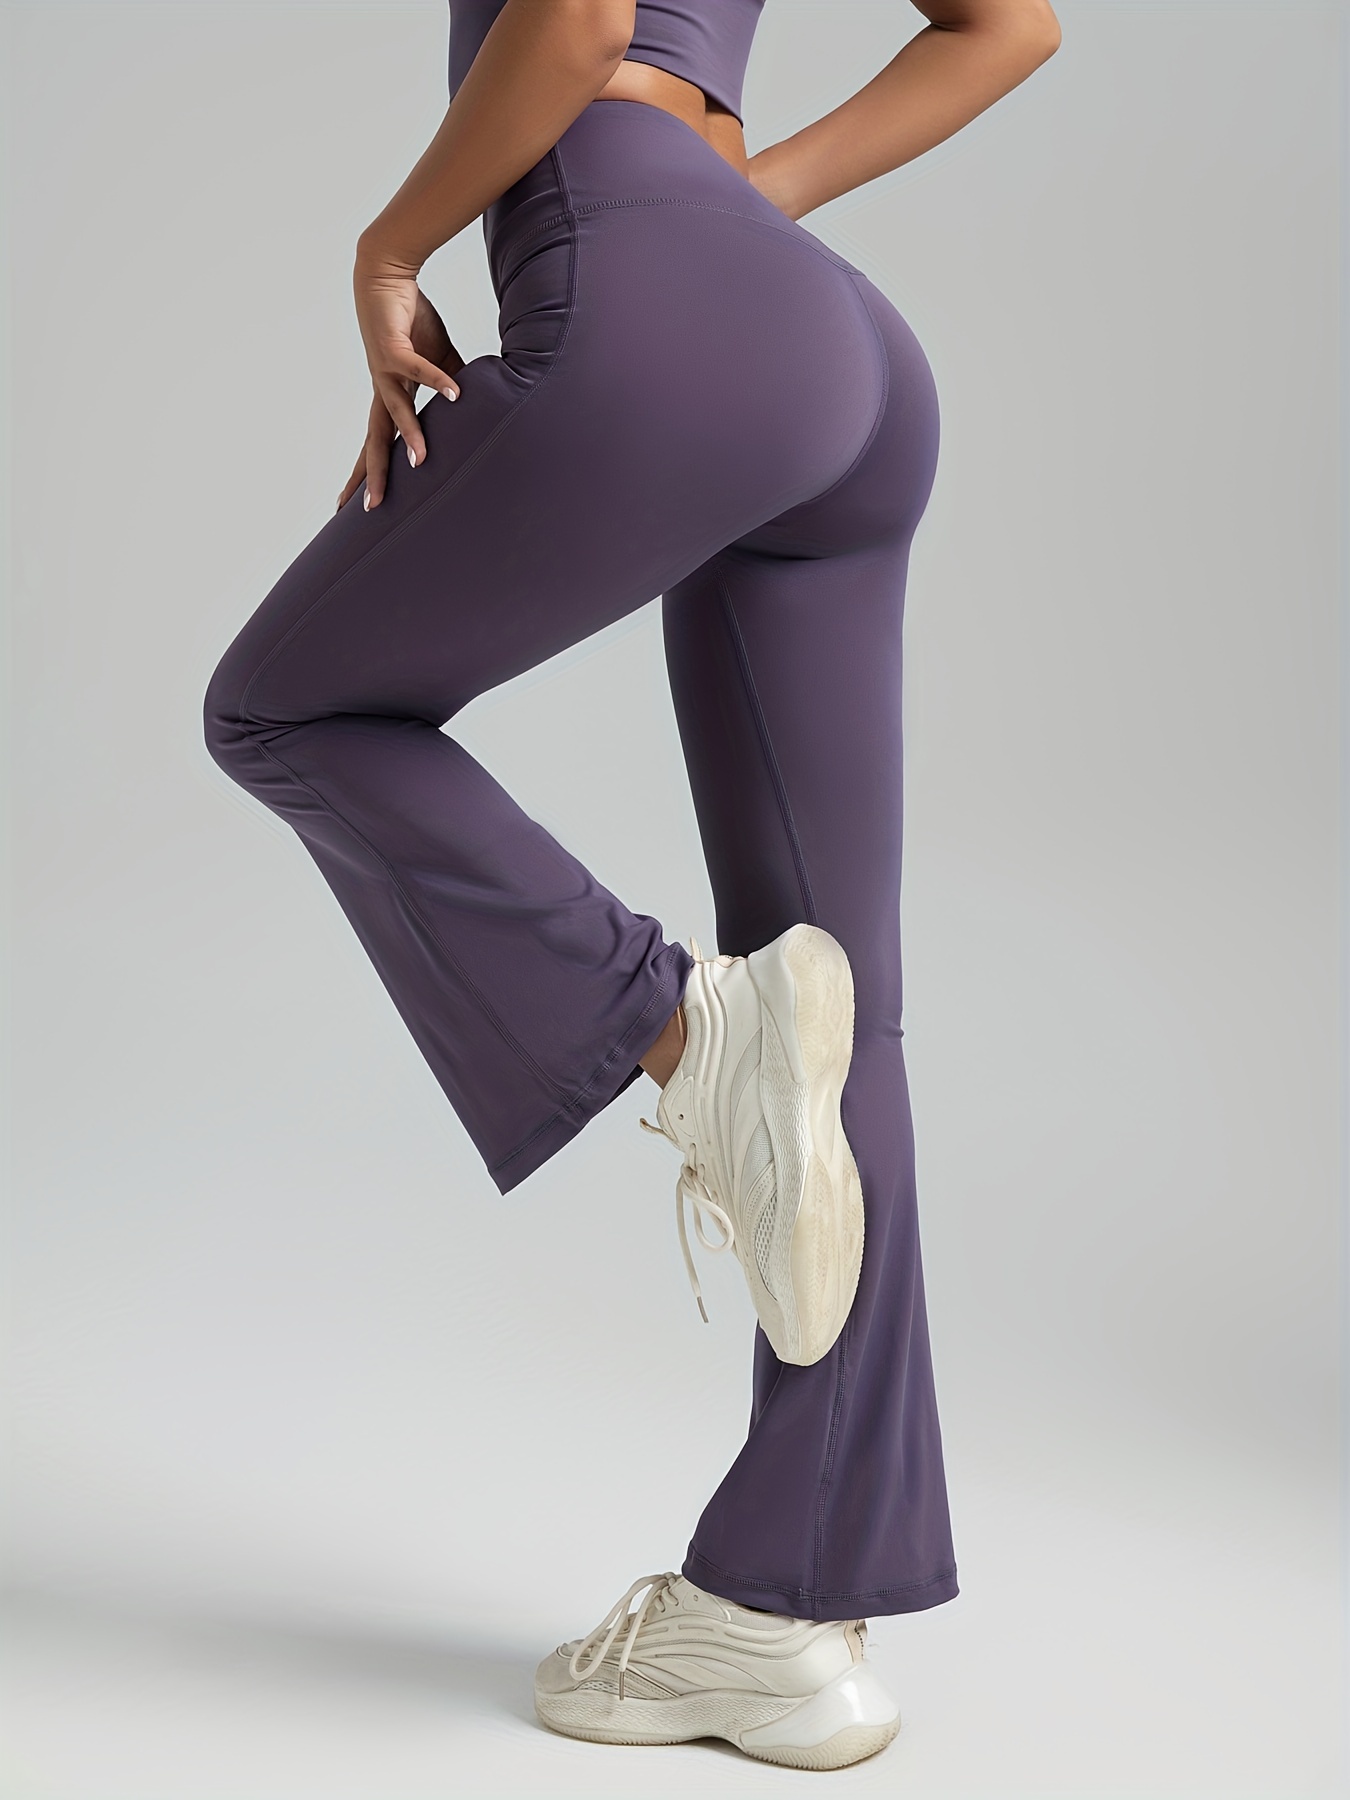 EQWLJWE Yoga Pants for Women Hole Solid Color Leggings Tightening Sports  Casual Yoga Pants Flare Leggings High Waisted Pants